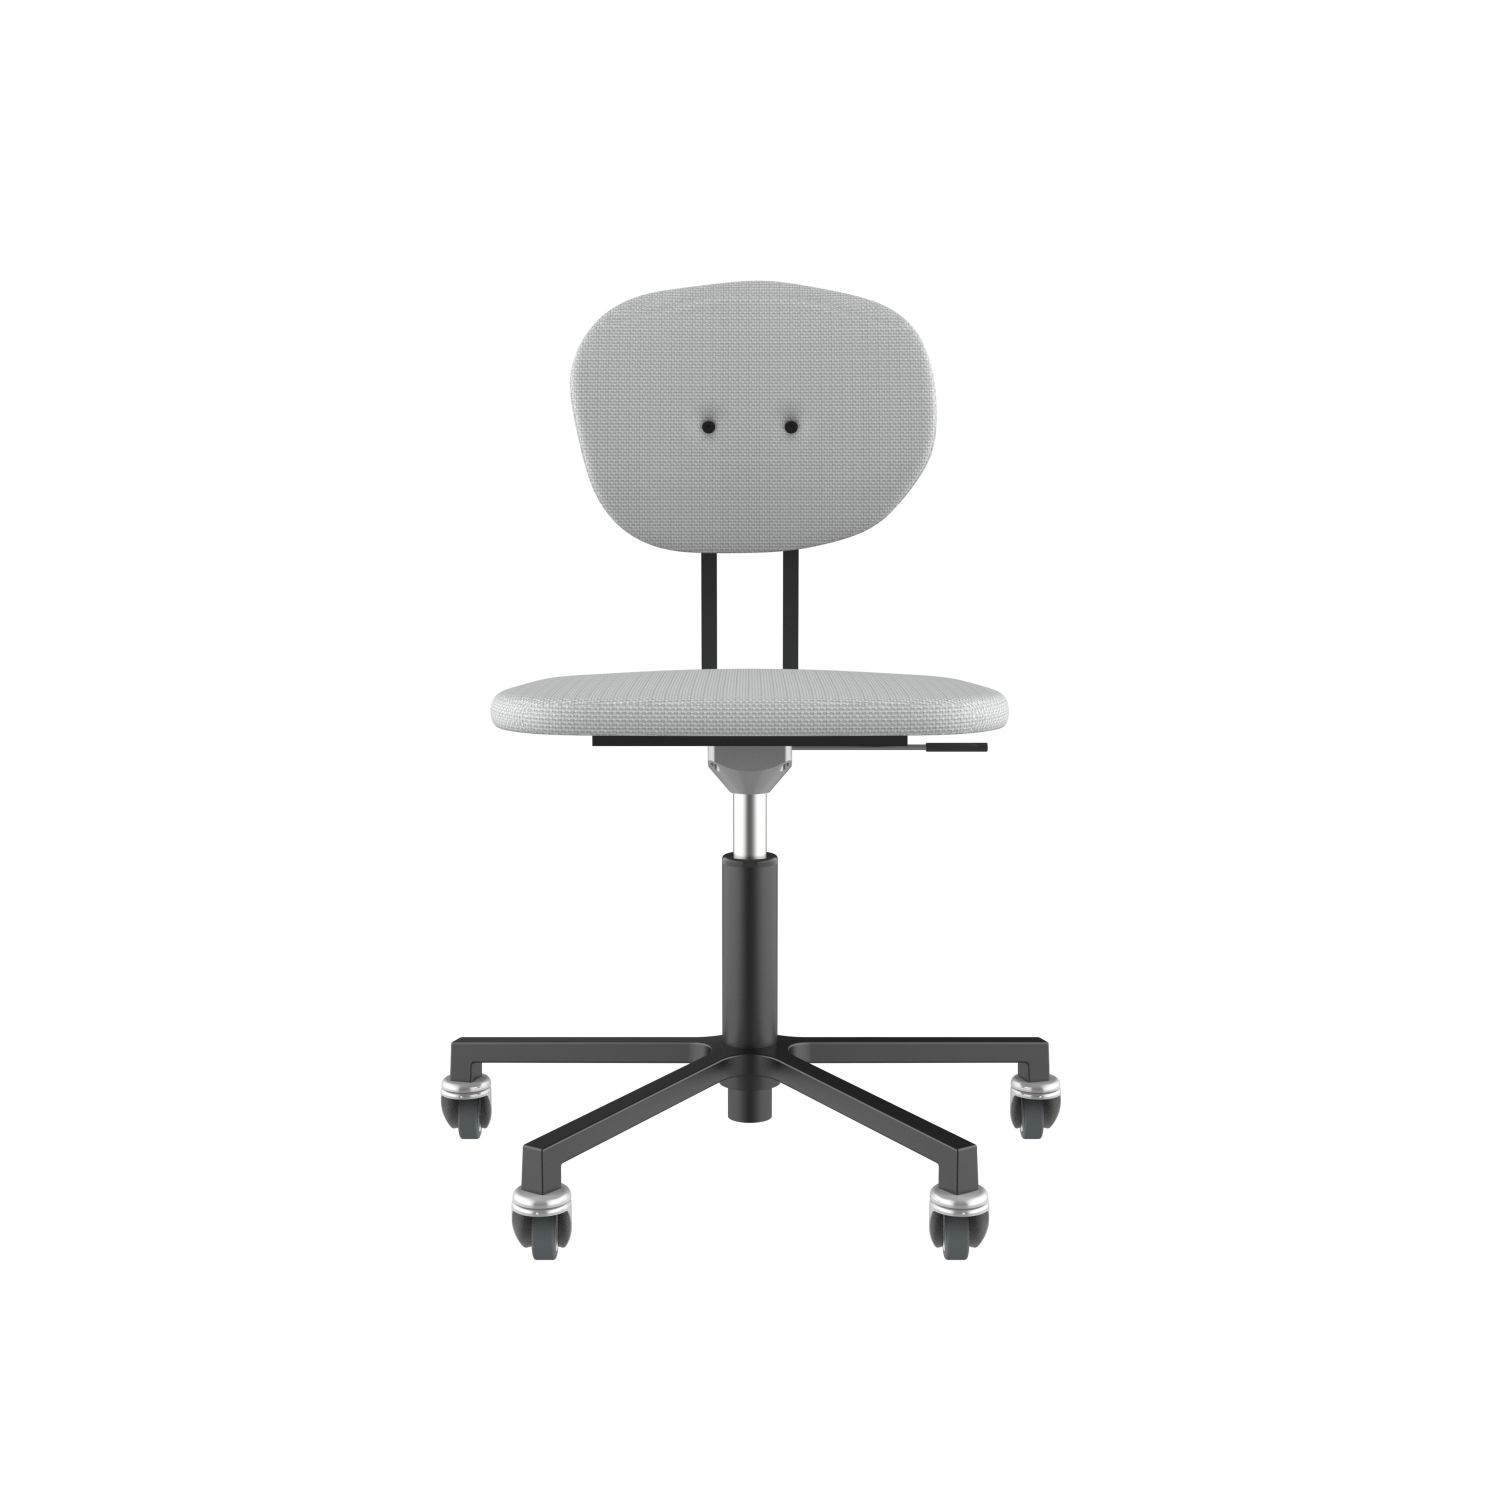 lensvelt maarten baas office chair without armrests backrest a breeze light grey 171 black ral9005 soft wheels